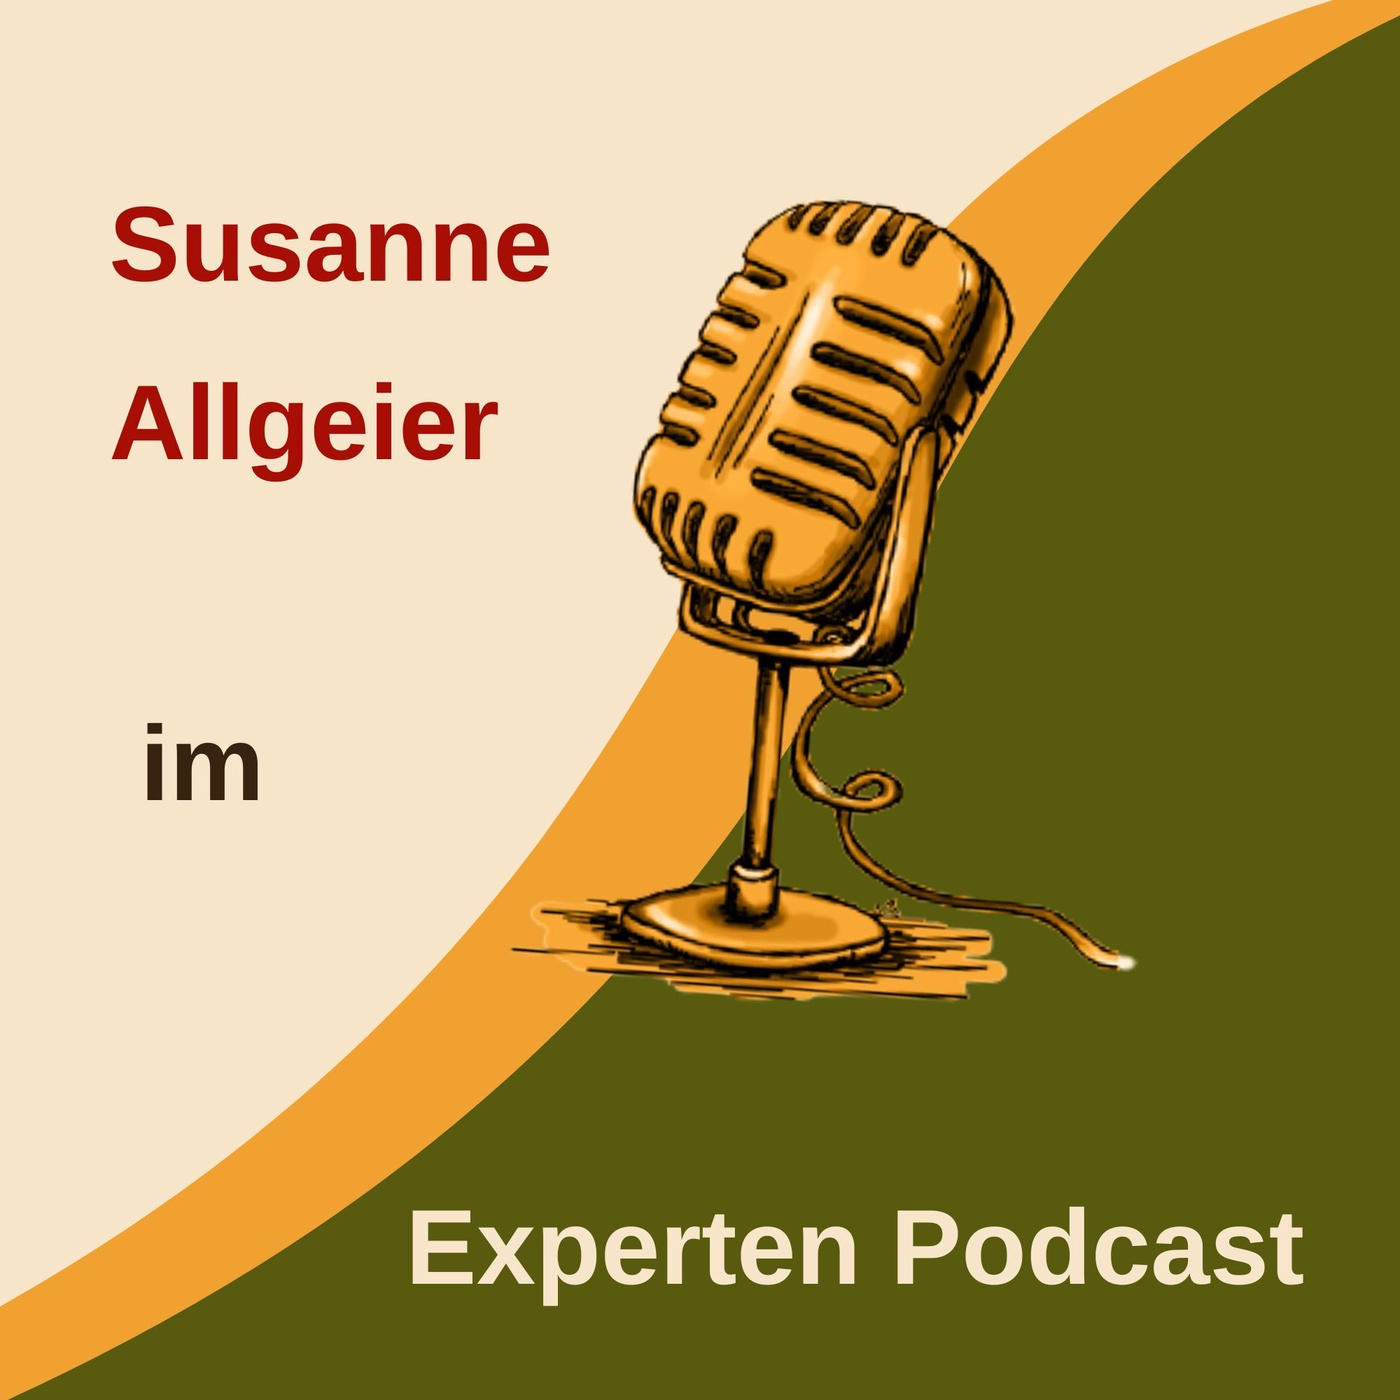 Susanne Allgeier im Experten Podcast